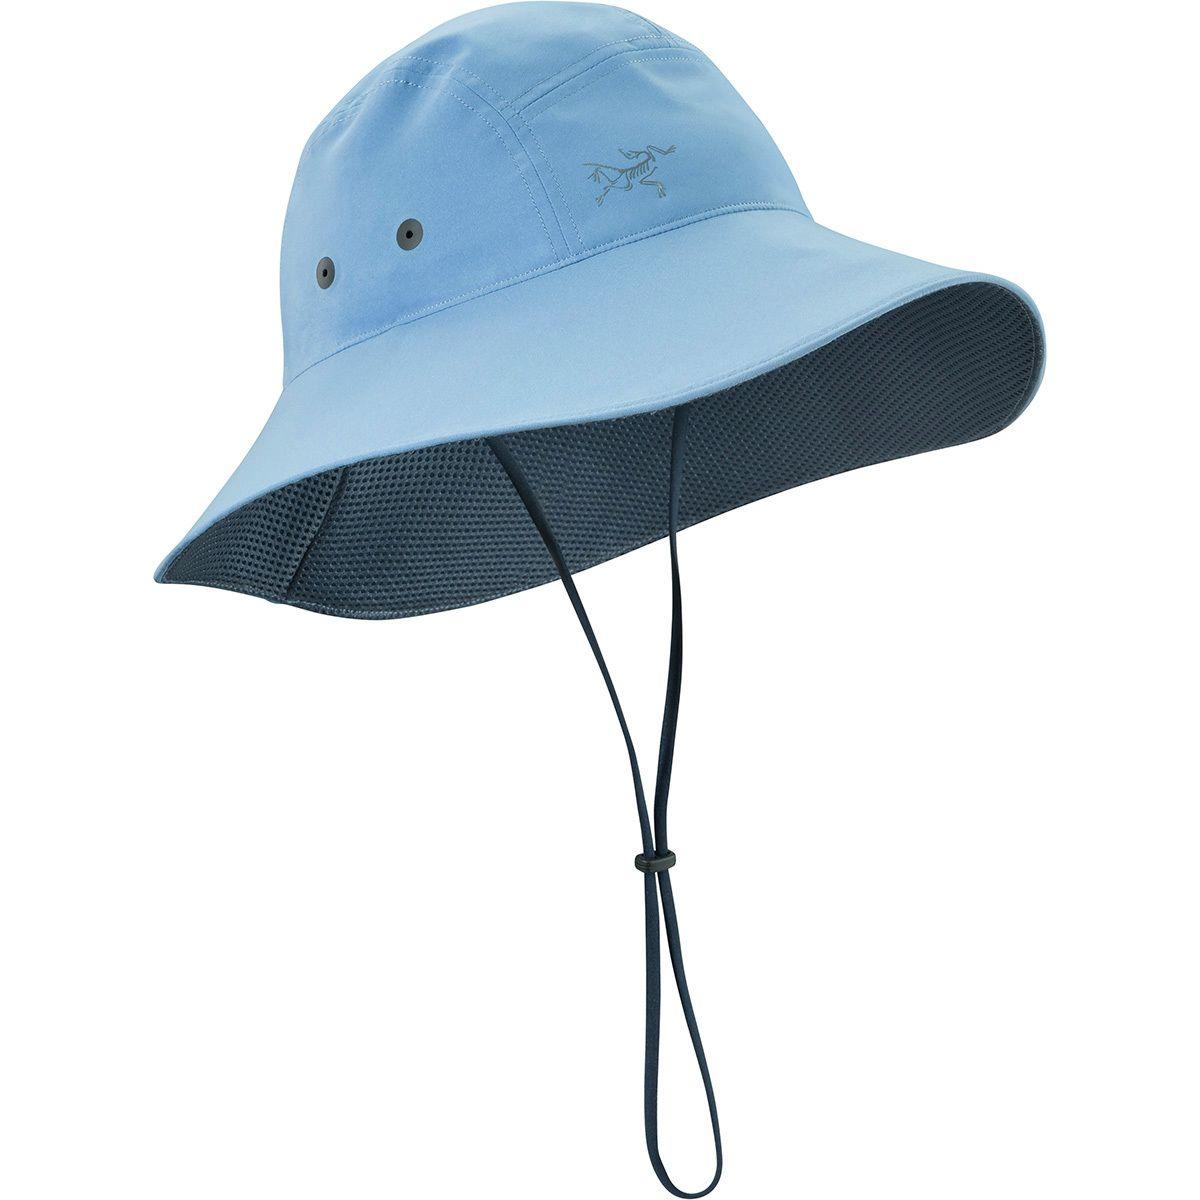 Arc'teryx Sinsola Hat in Blue for Men - Lyst